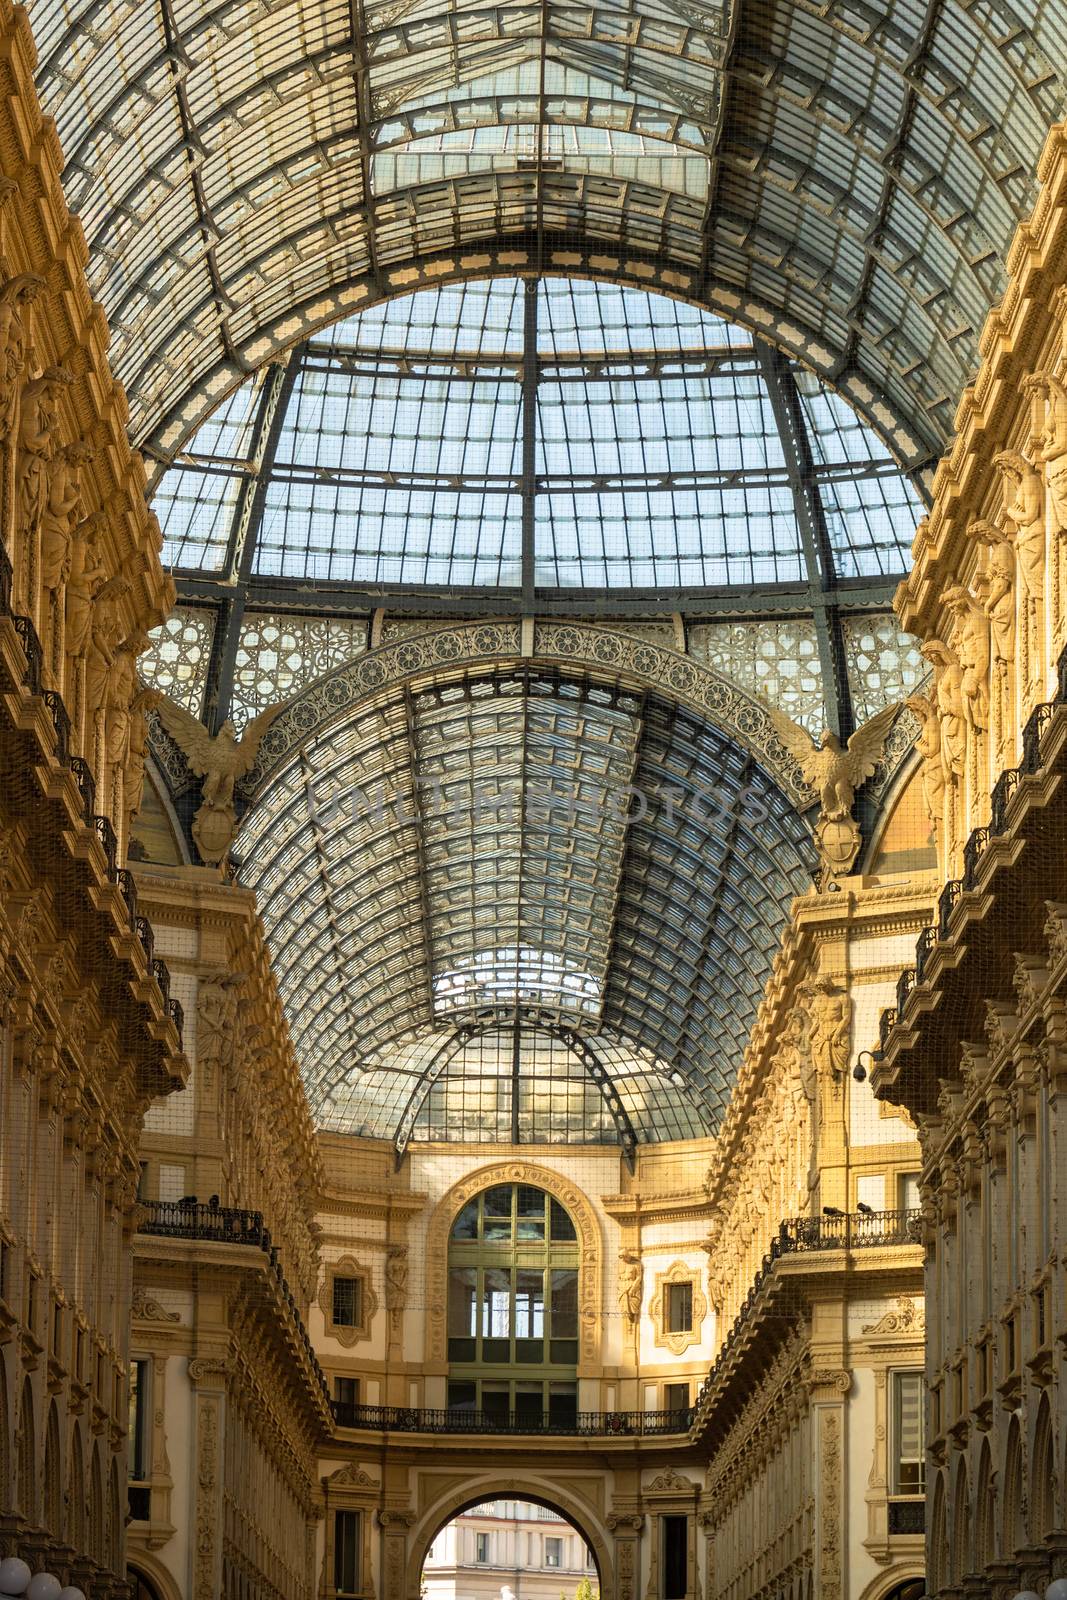 Gallery Vittorio Emanuele II in Milan Italy by magann